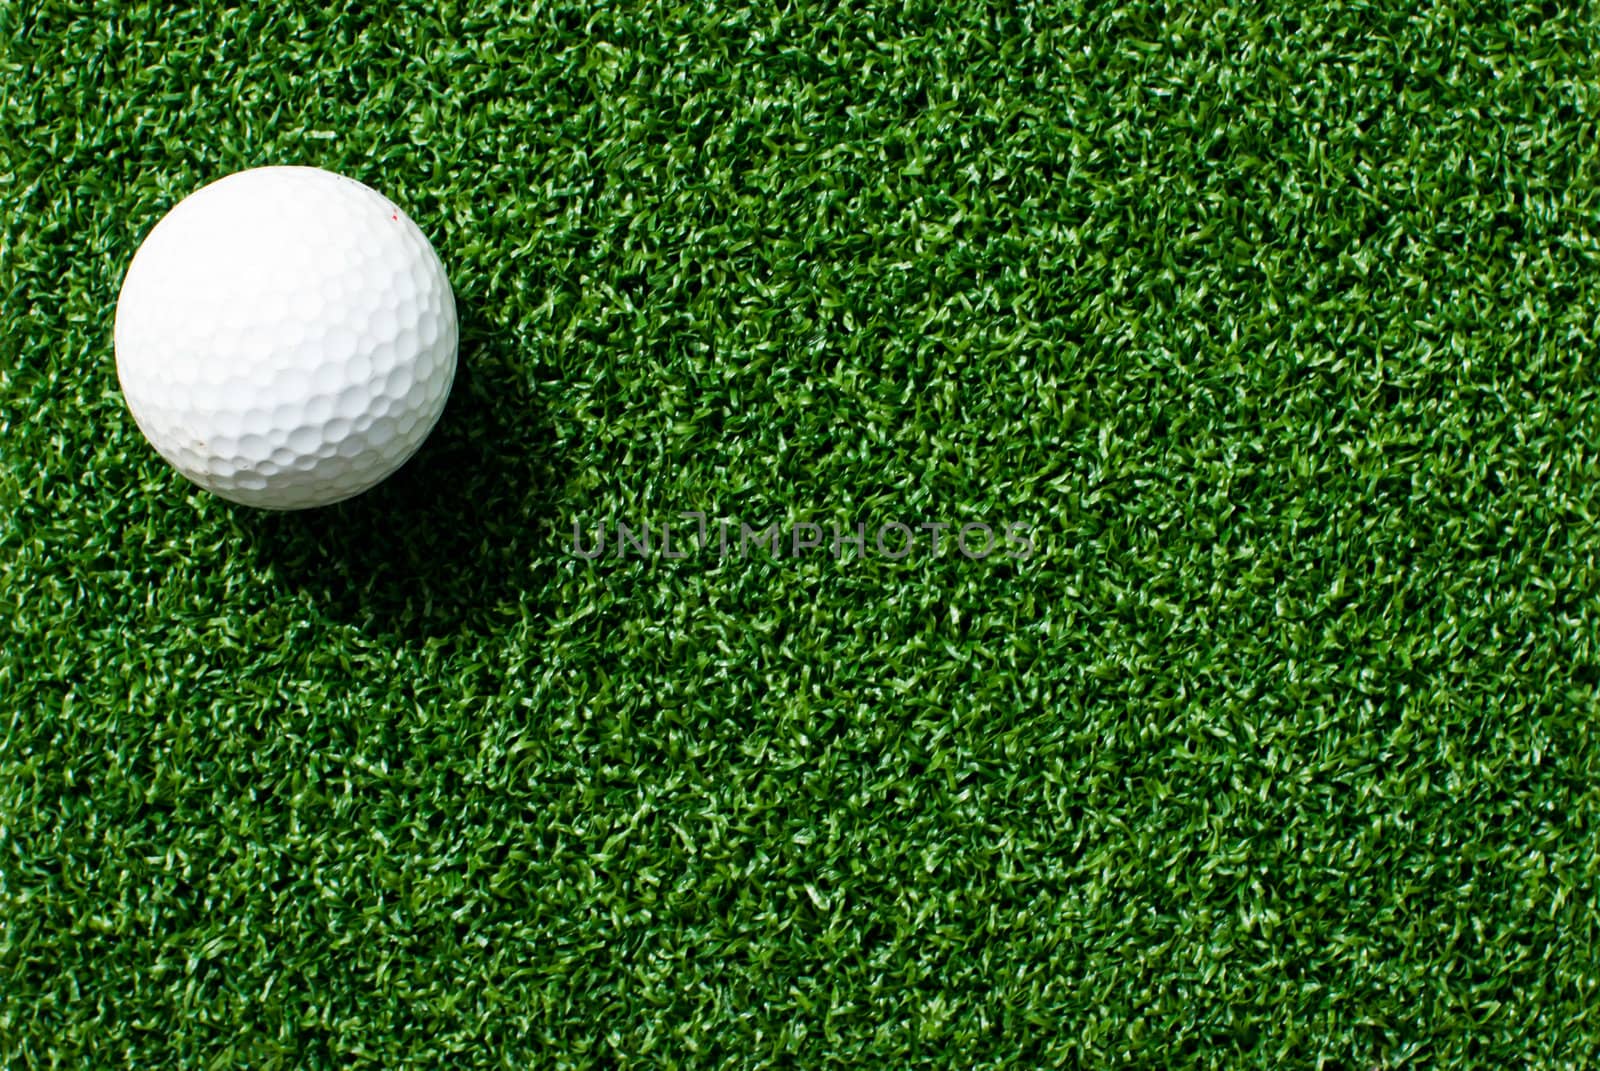 Golf ball on green grass by ponsulak